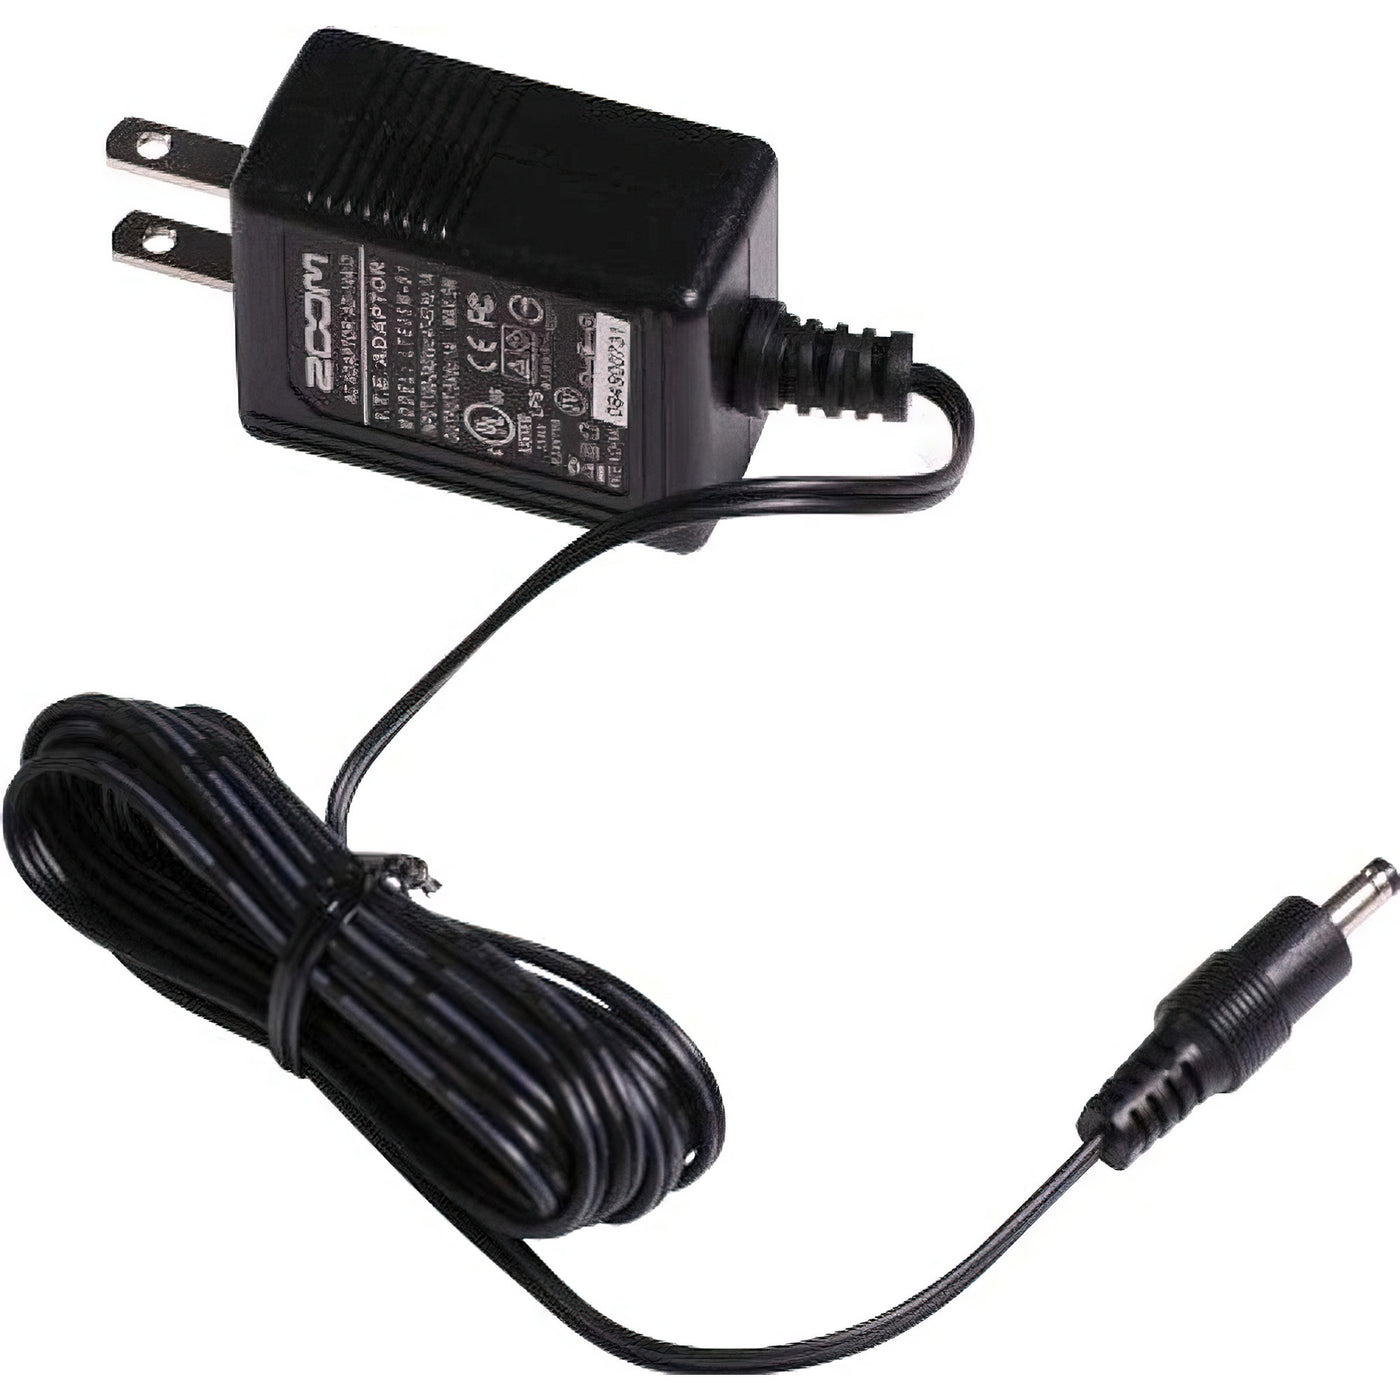 Zoom AC Adapter, 5V AC Power Adapter Designed for Use with H4n, H4n Pro, ARQ AR-96, AR-48, UAC-2, R16, and R24 (AD-14)